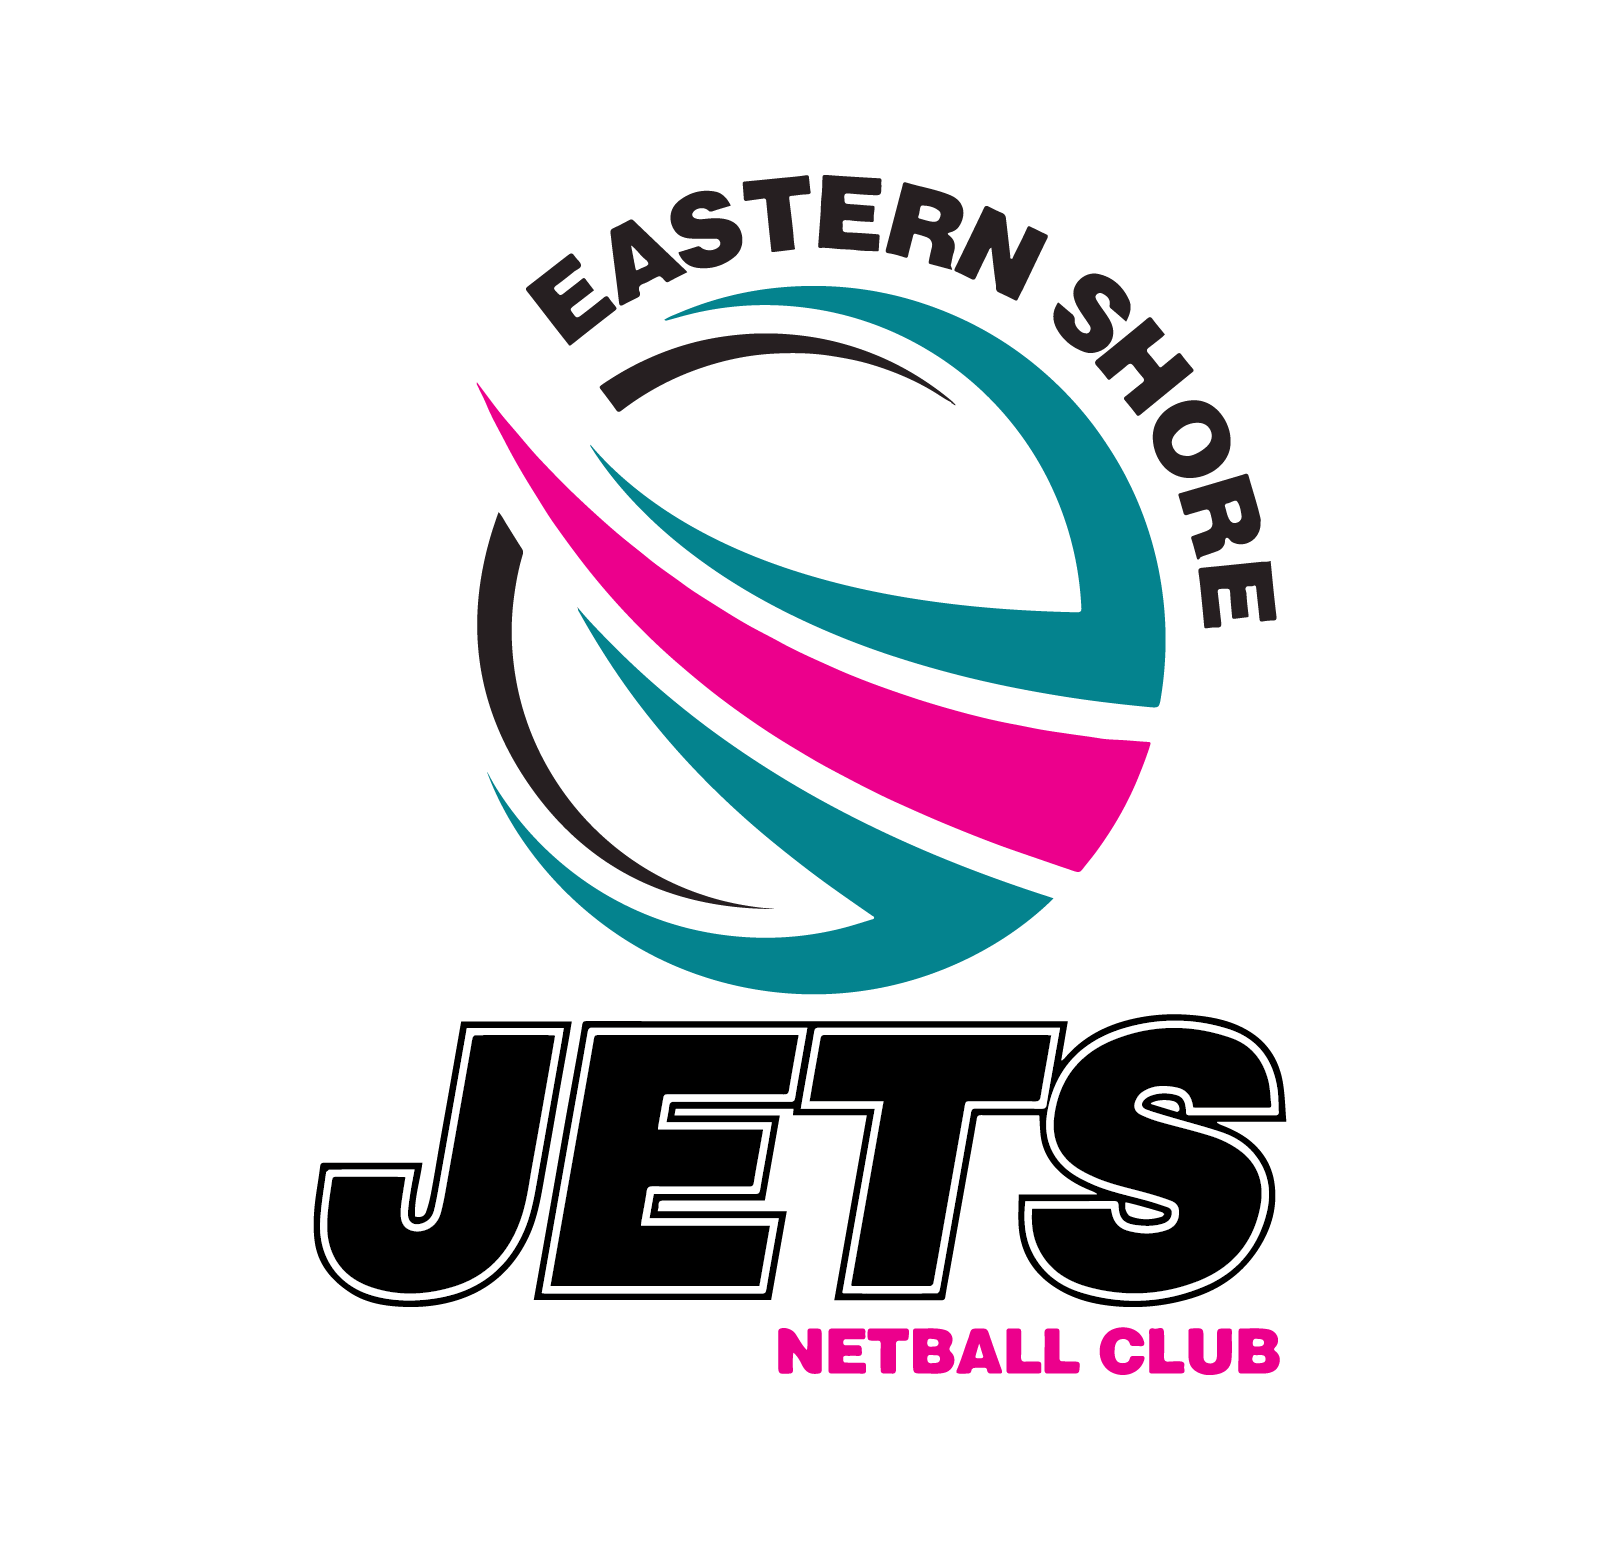 Eastern Shore Jets Netball Club